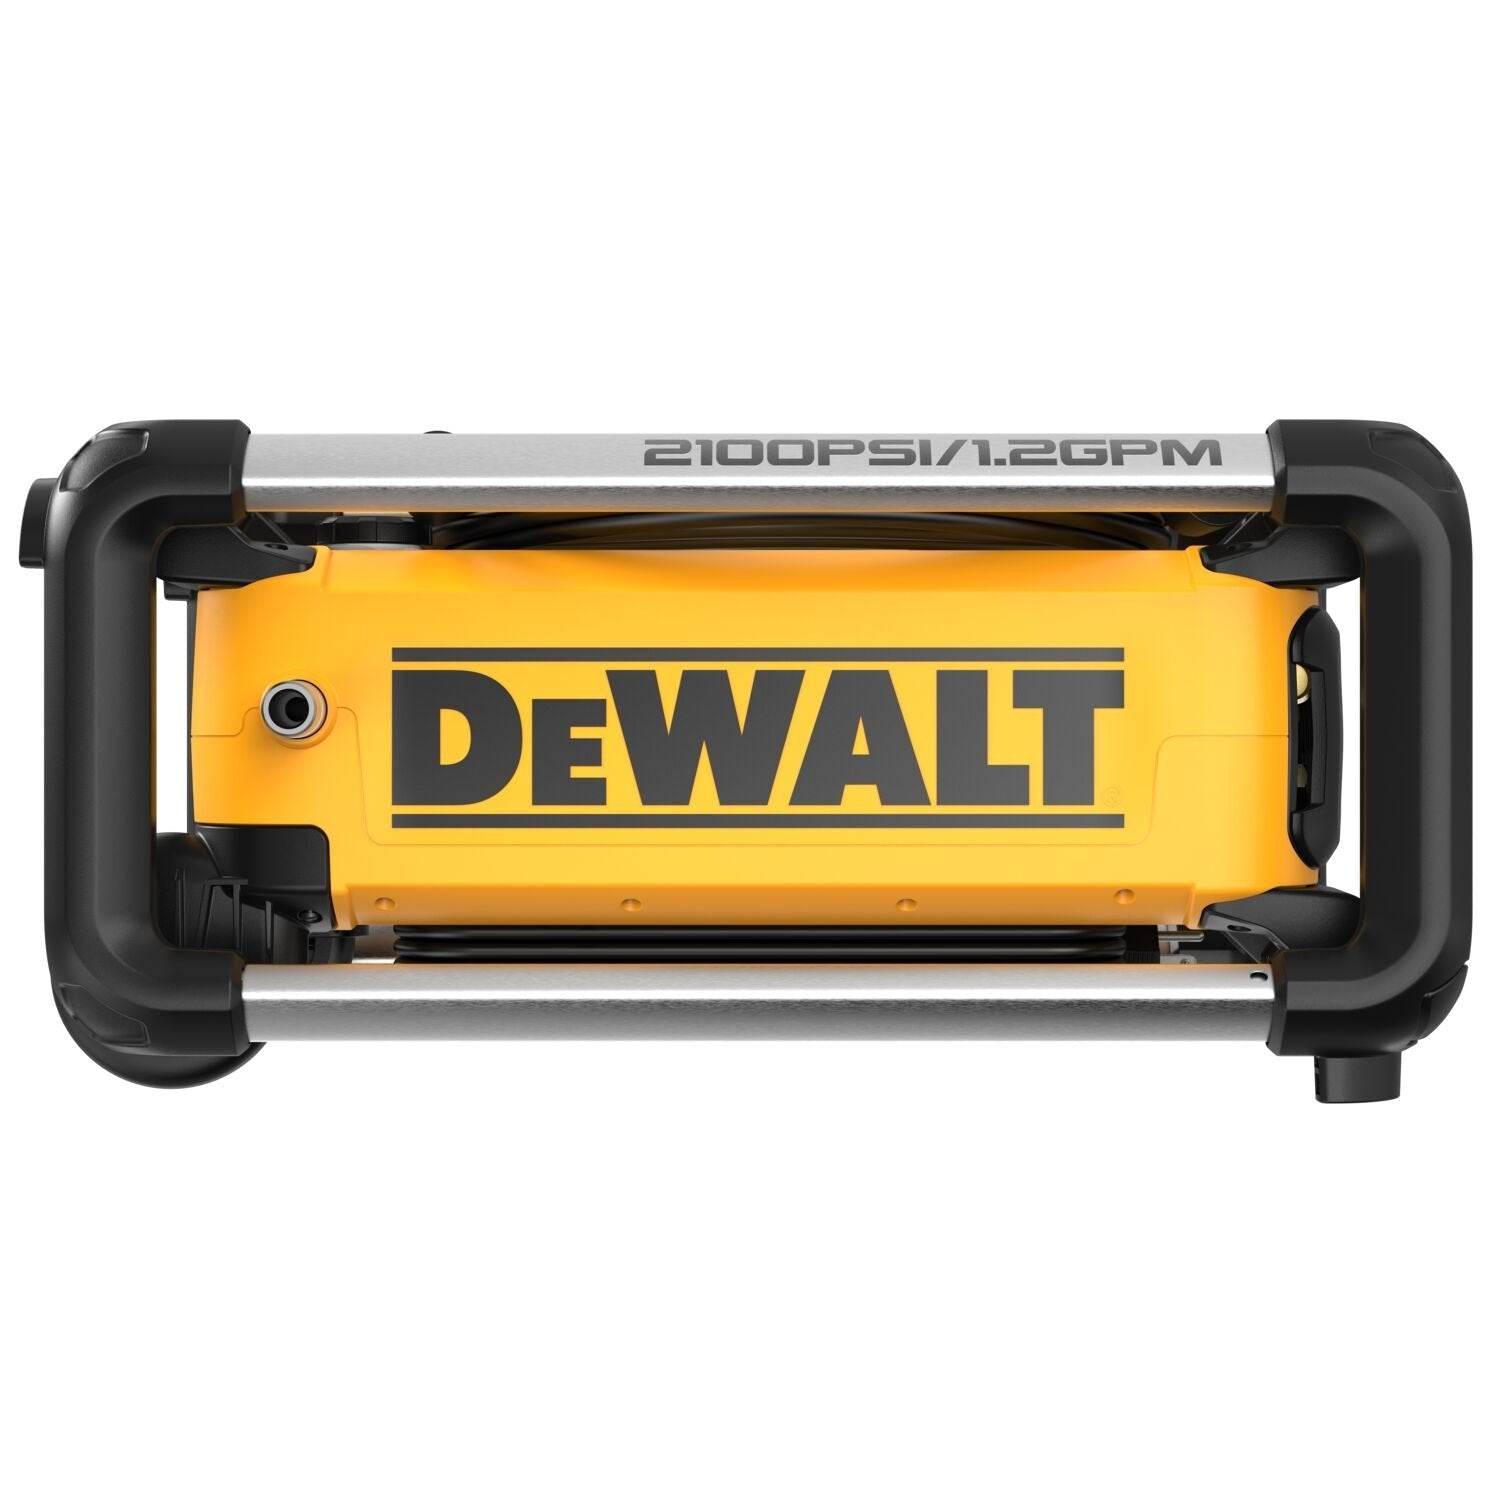 DeWalt DWPW2100 - 2,100 MAX psi* 1.2 gpm** 13 Amp Electric Jobsite Cold Water Pressure Washer